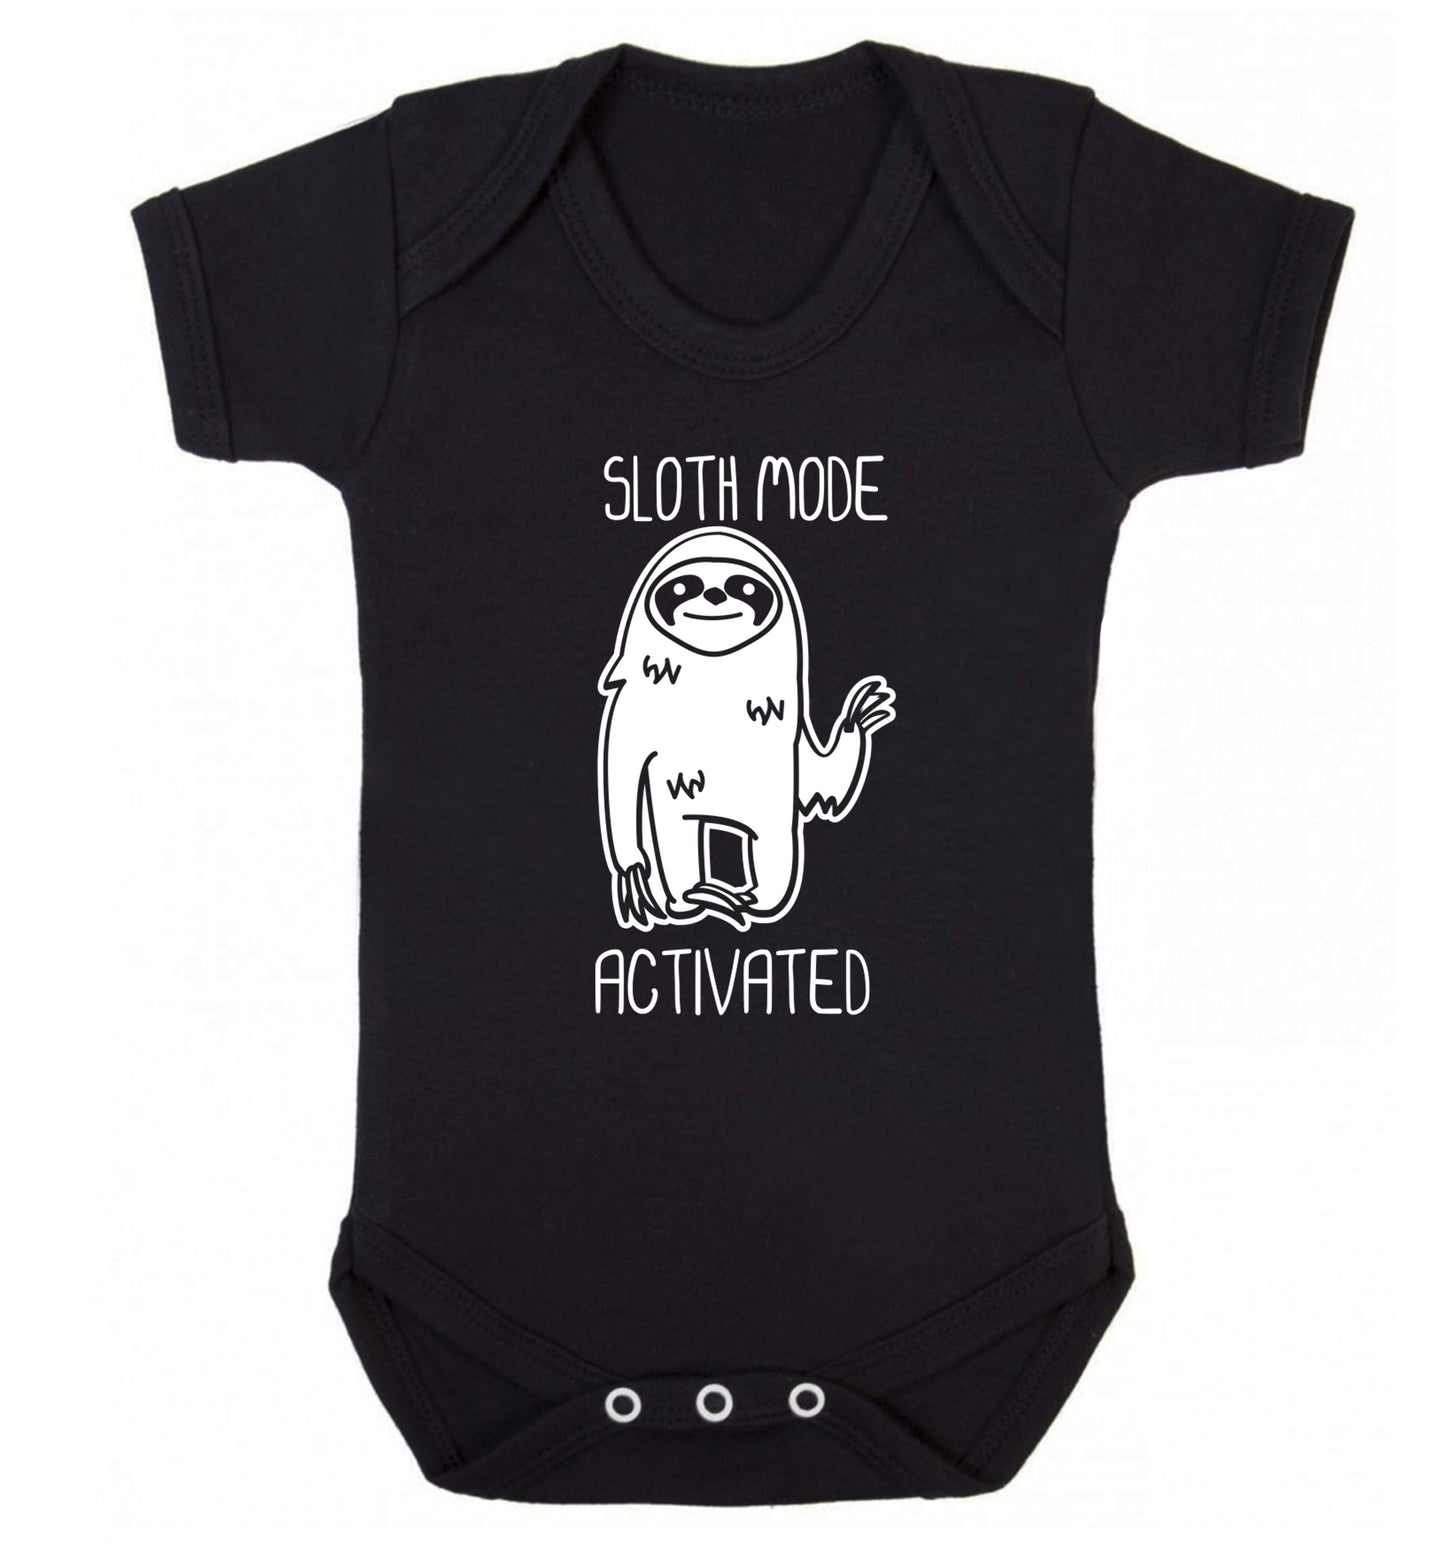 Sloth mode acitvated Baby Vest black 18-24 months